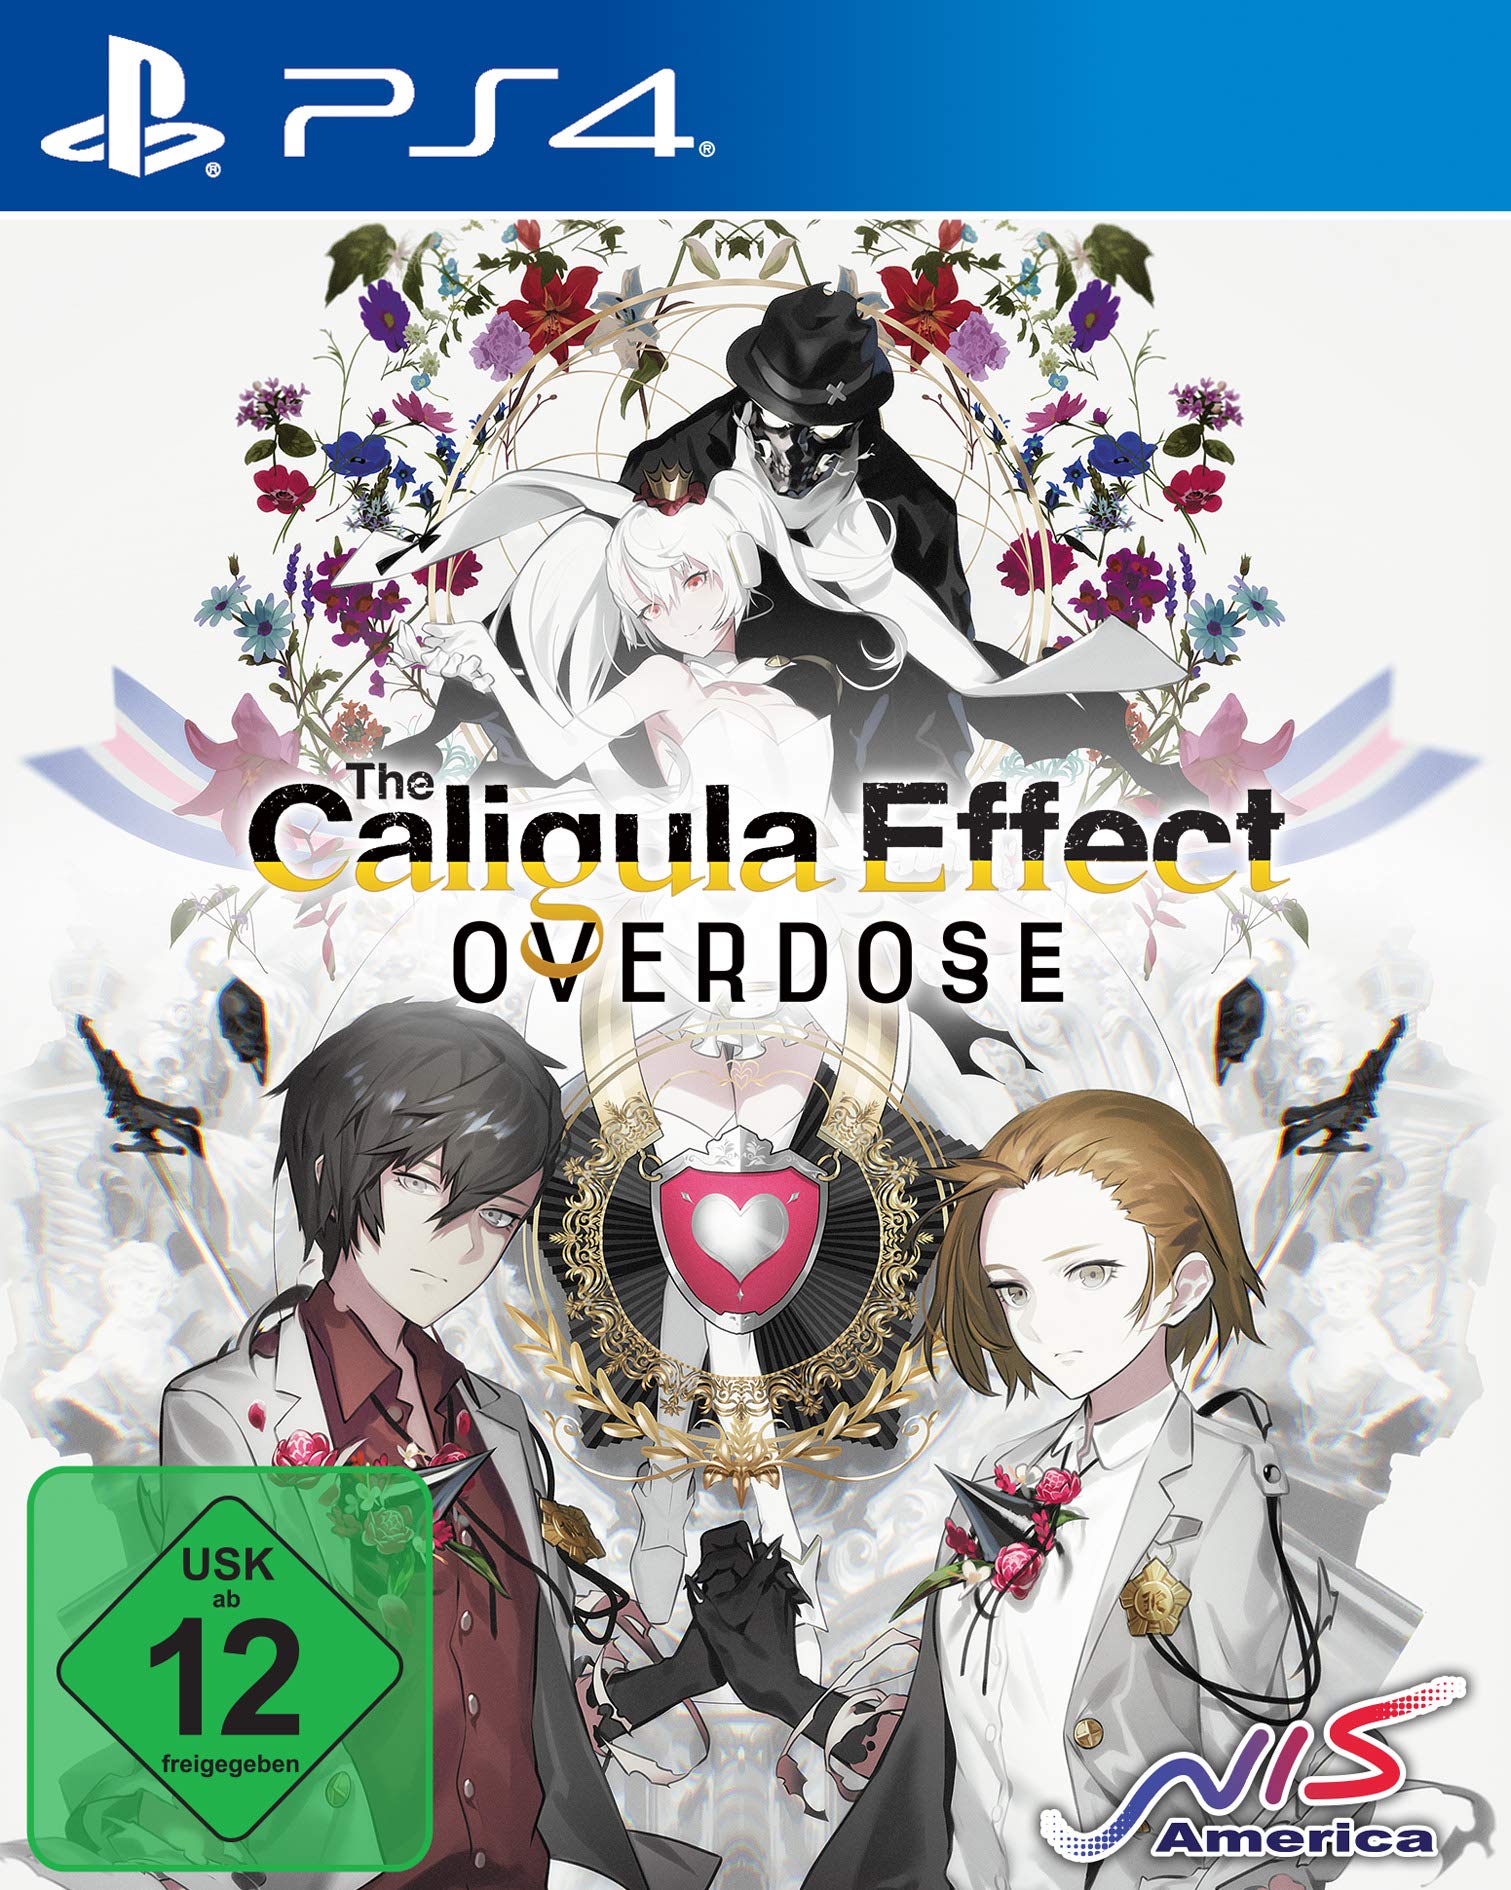 The Caligula Effect: Overdose [Playstation 4]